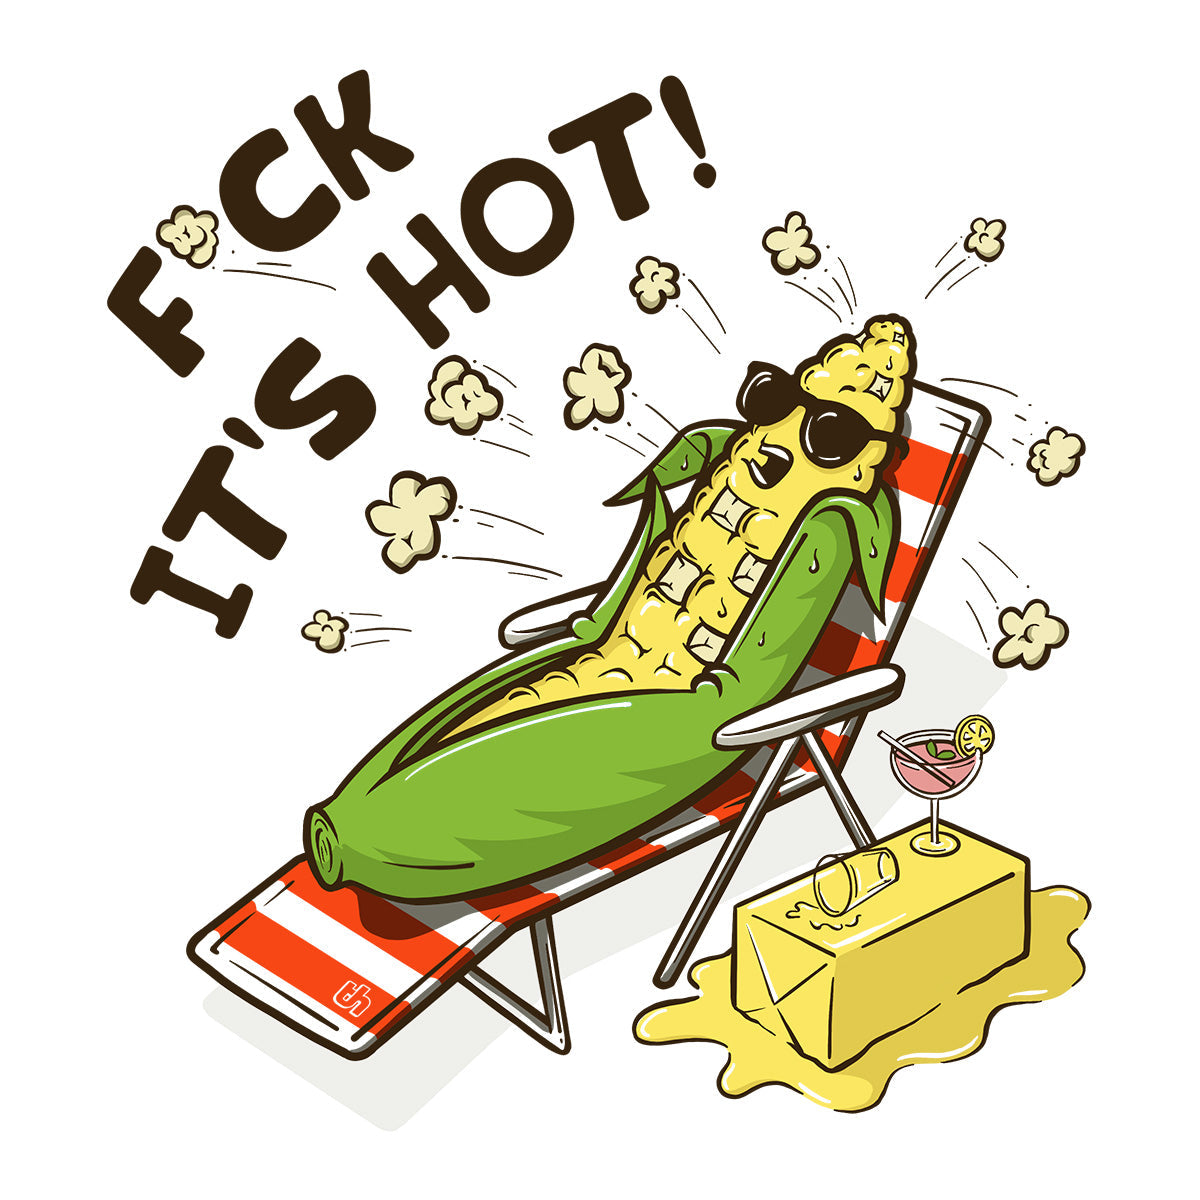 F-ck It's Hot Funny Rude Offensive Corn Popcorn Snack Food Beach Sunbaking Summer Cotton T-Shirt